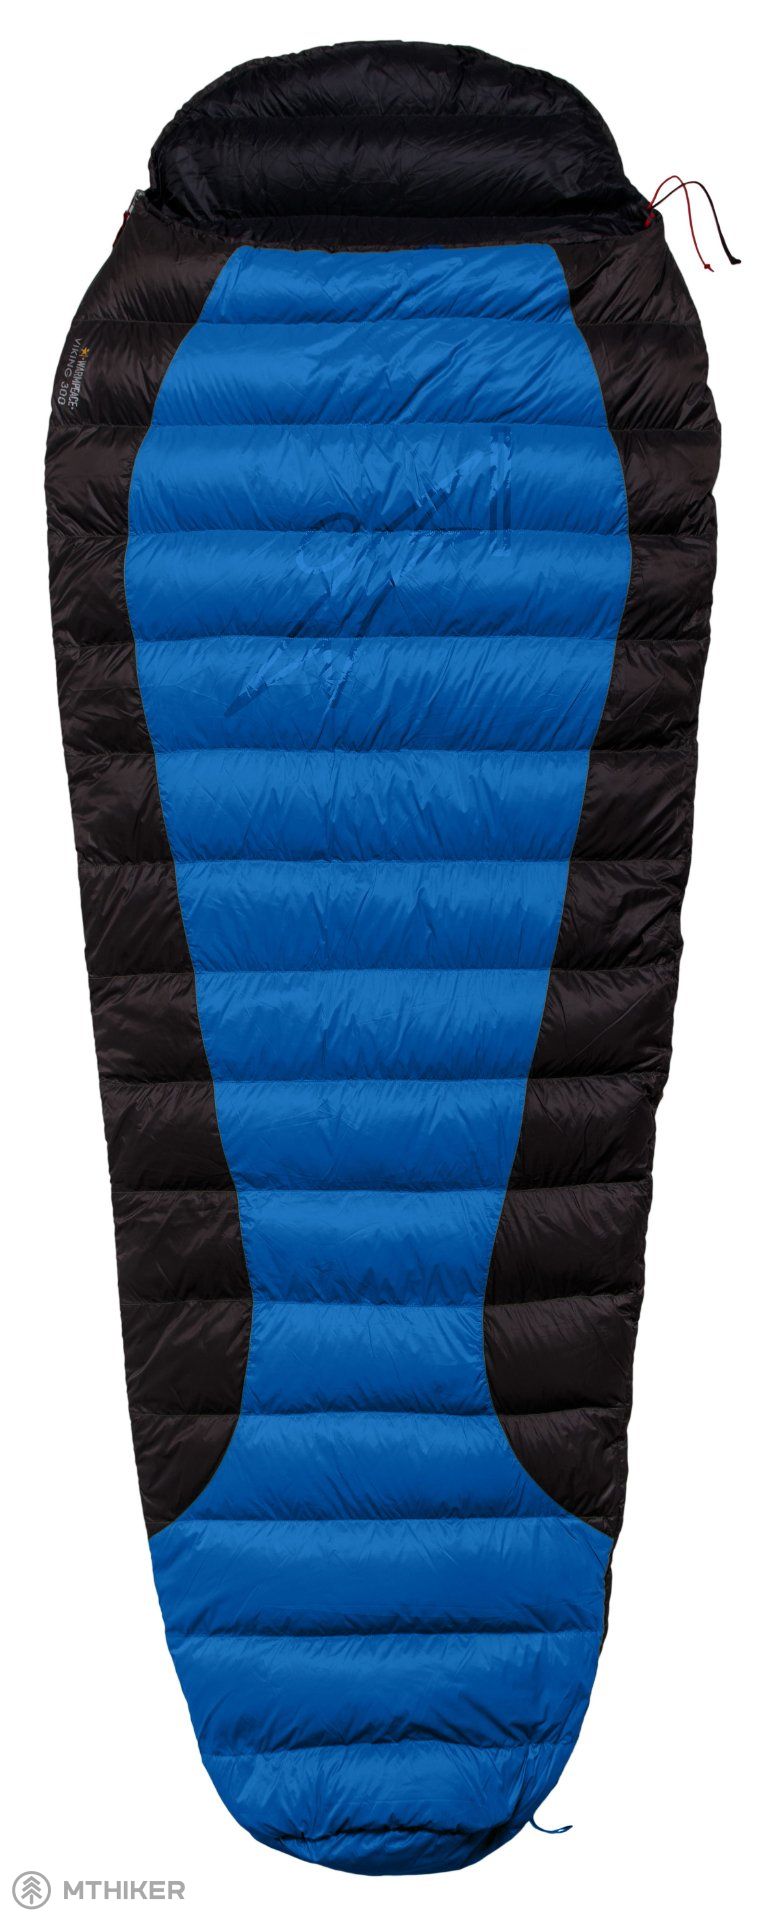 Warmpeace VIKING 300 sleeping bag, 195 cm, blue/grey/black